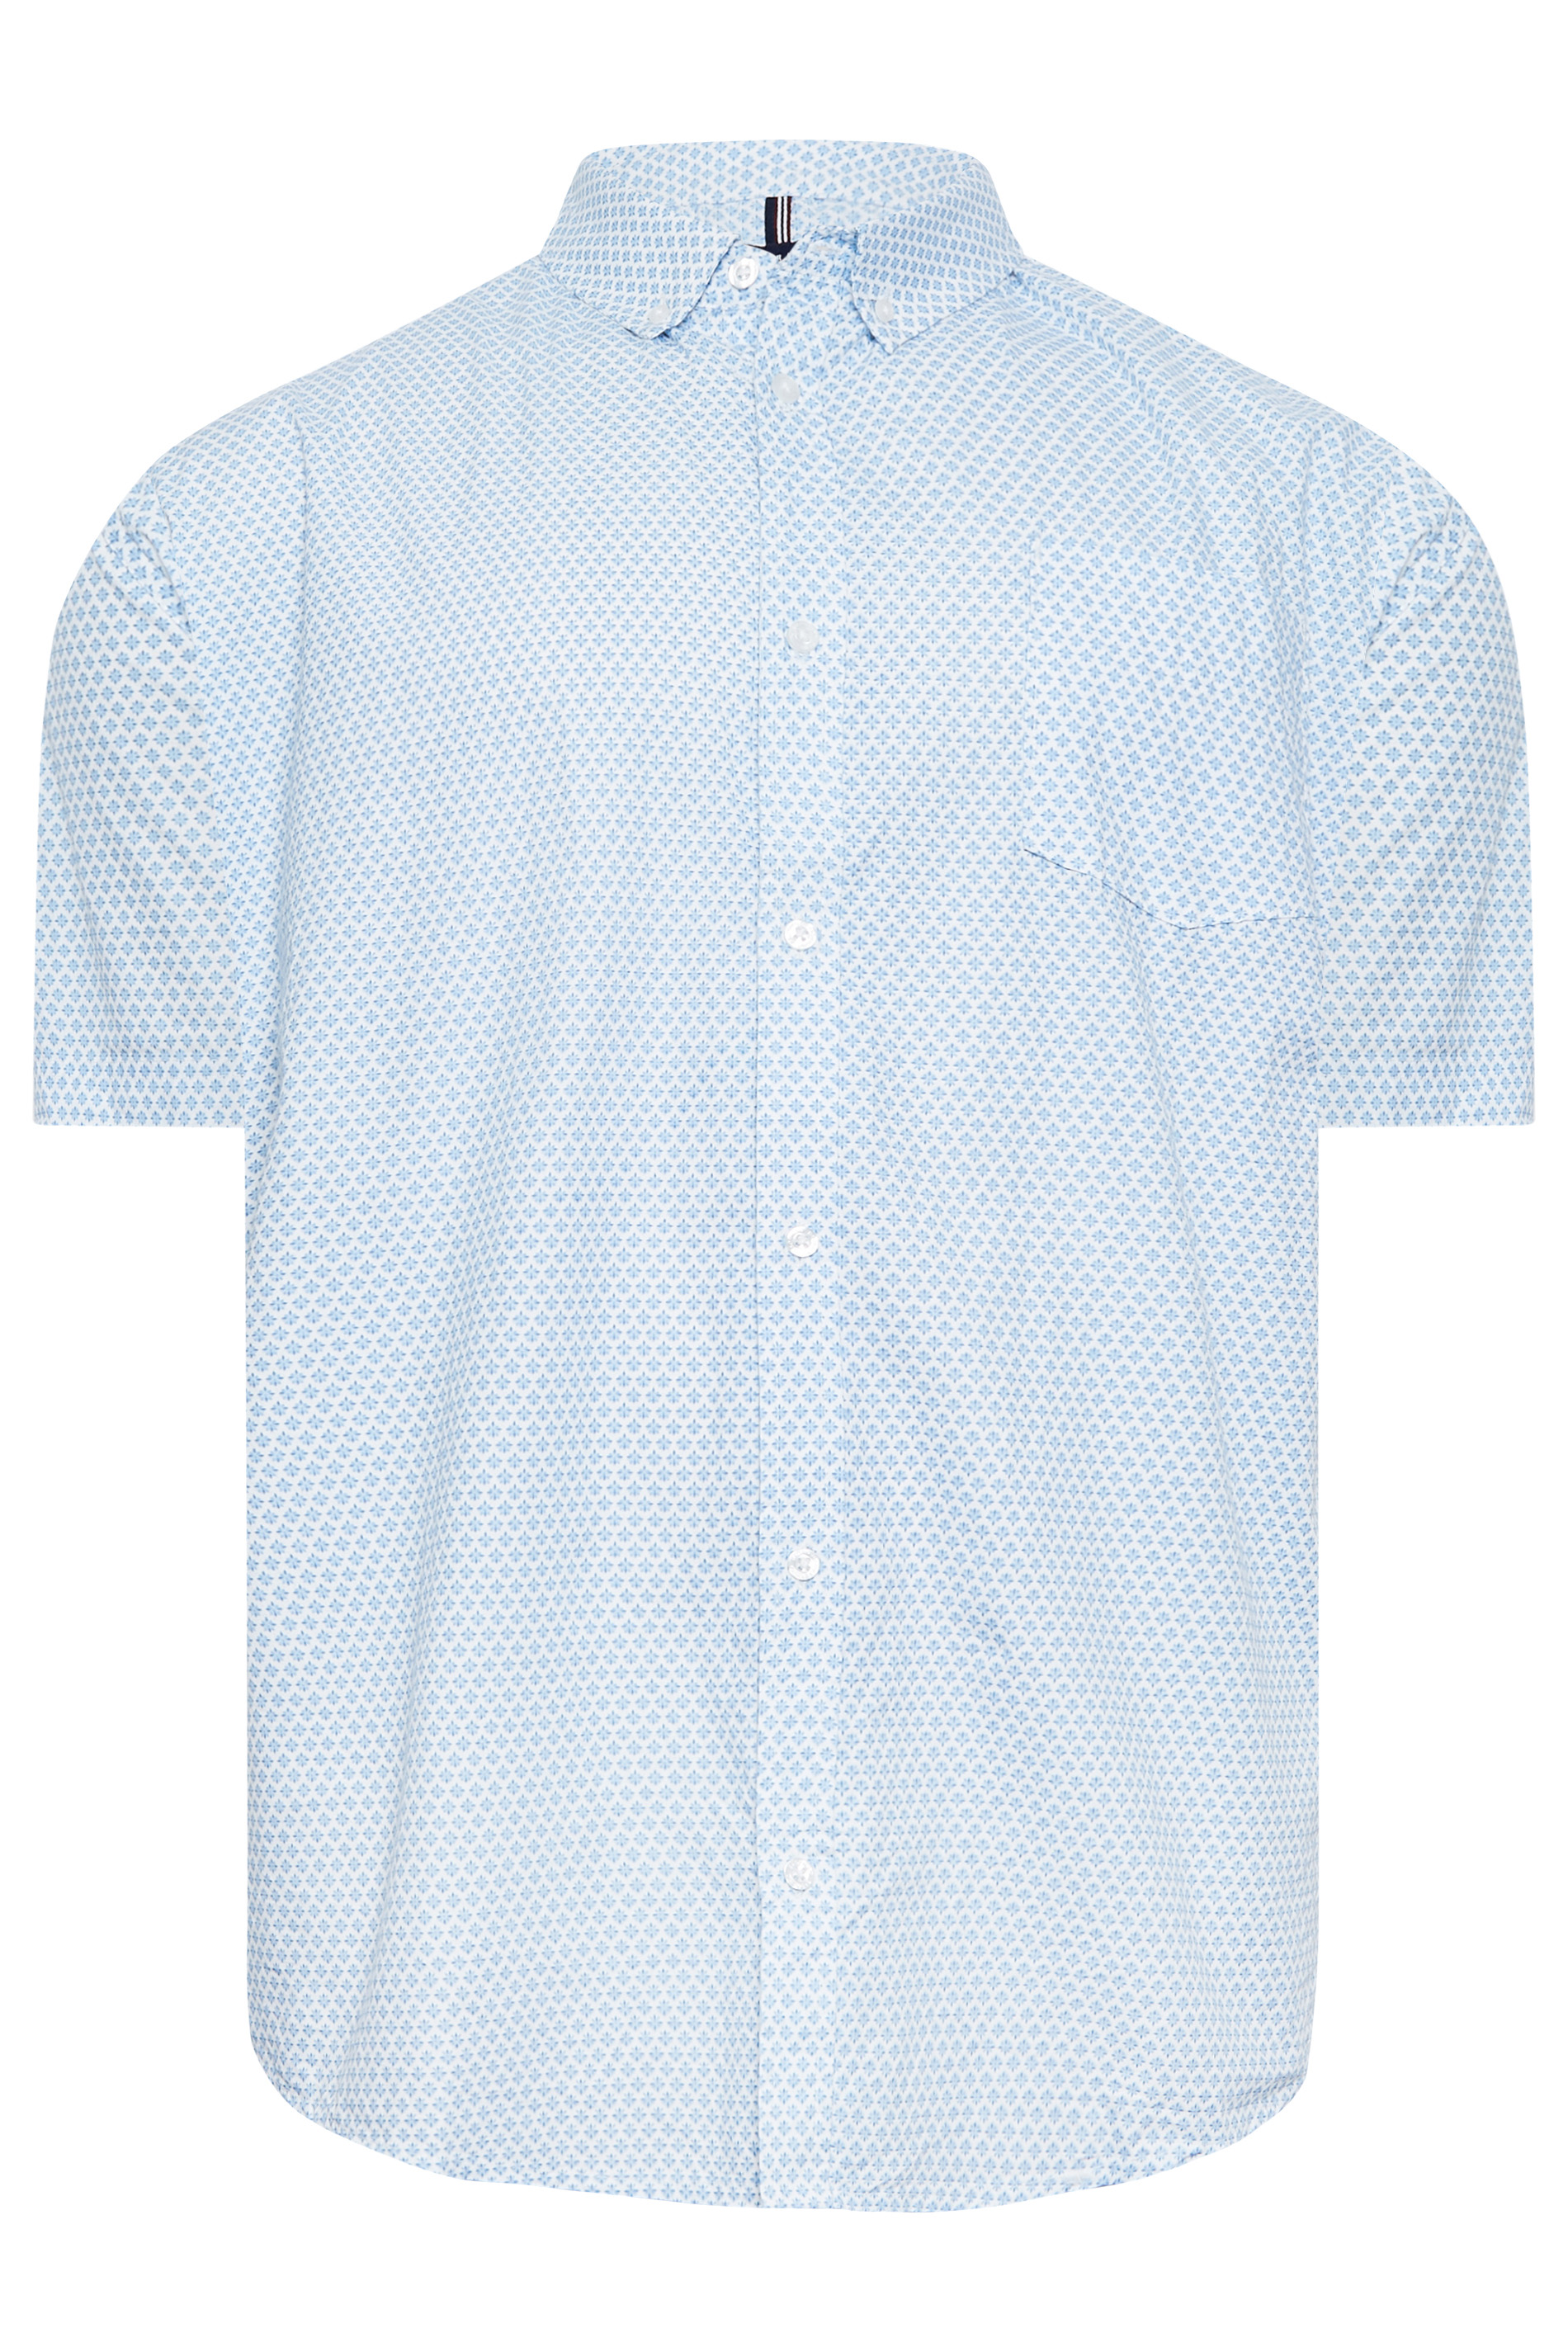 BadRhino Big & Tall White & Blue Geometric Print Poplin Shirt | BadRhino 3